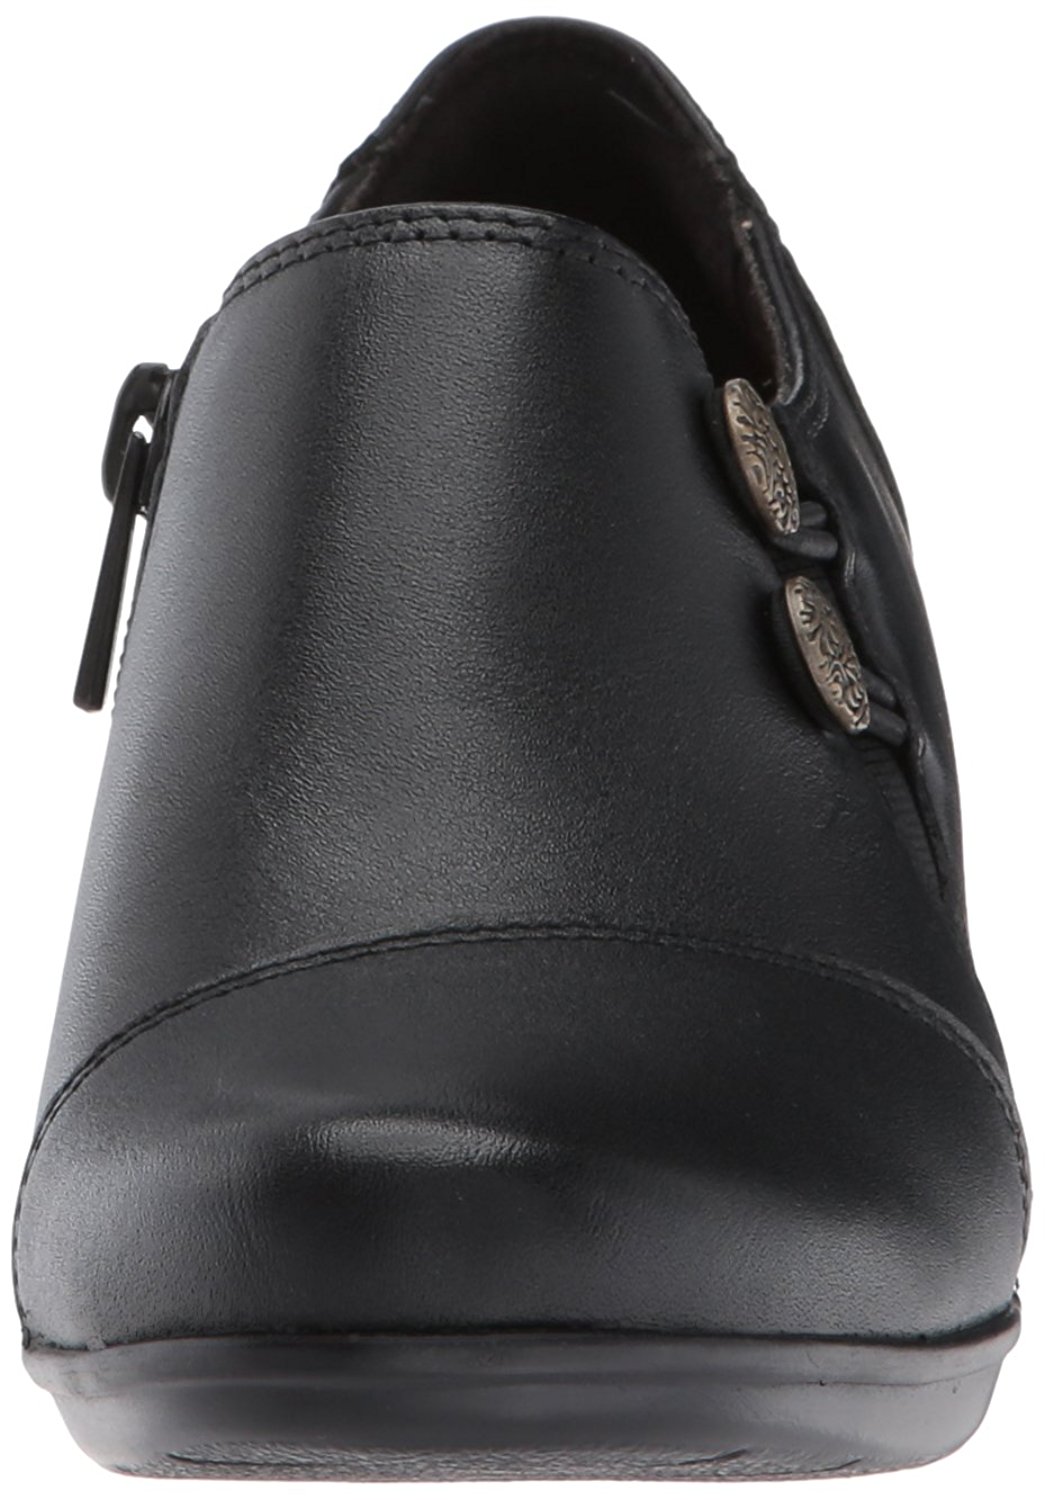 CLARKS Women's Emslie Warren Slip-on Loafer, Black Leather, Size 10.0 ...